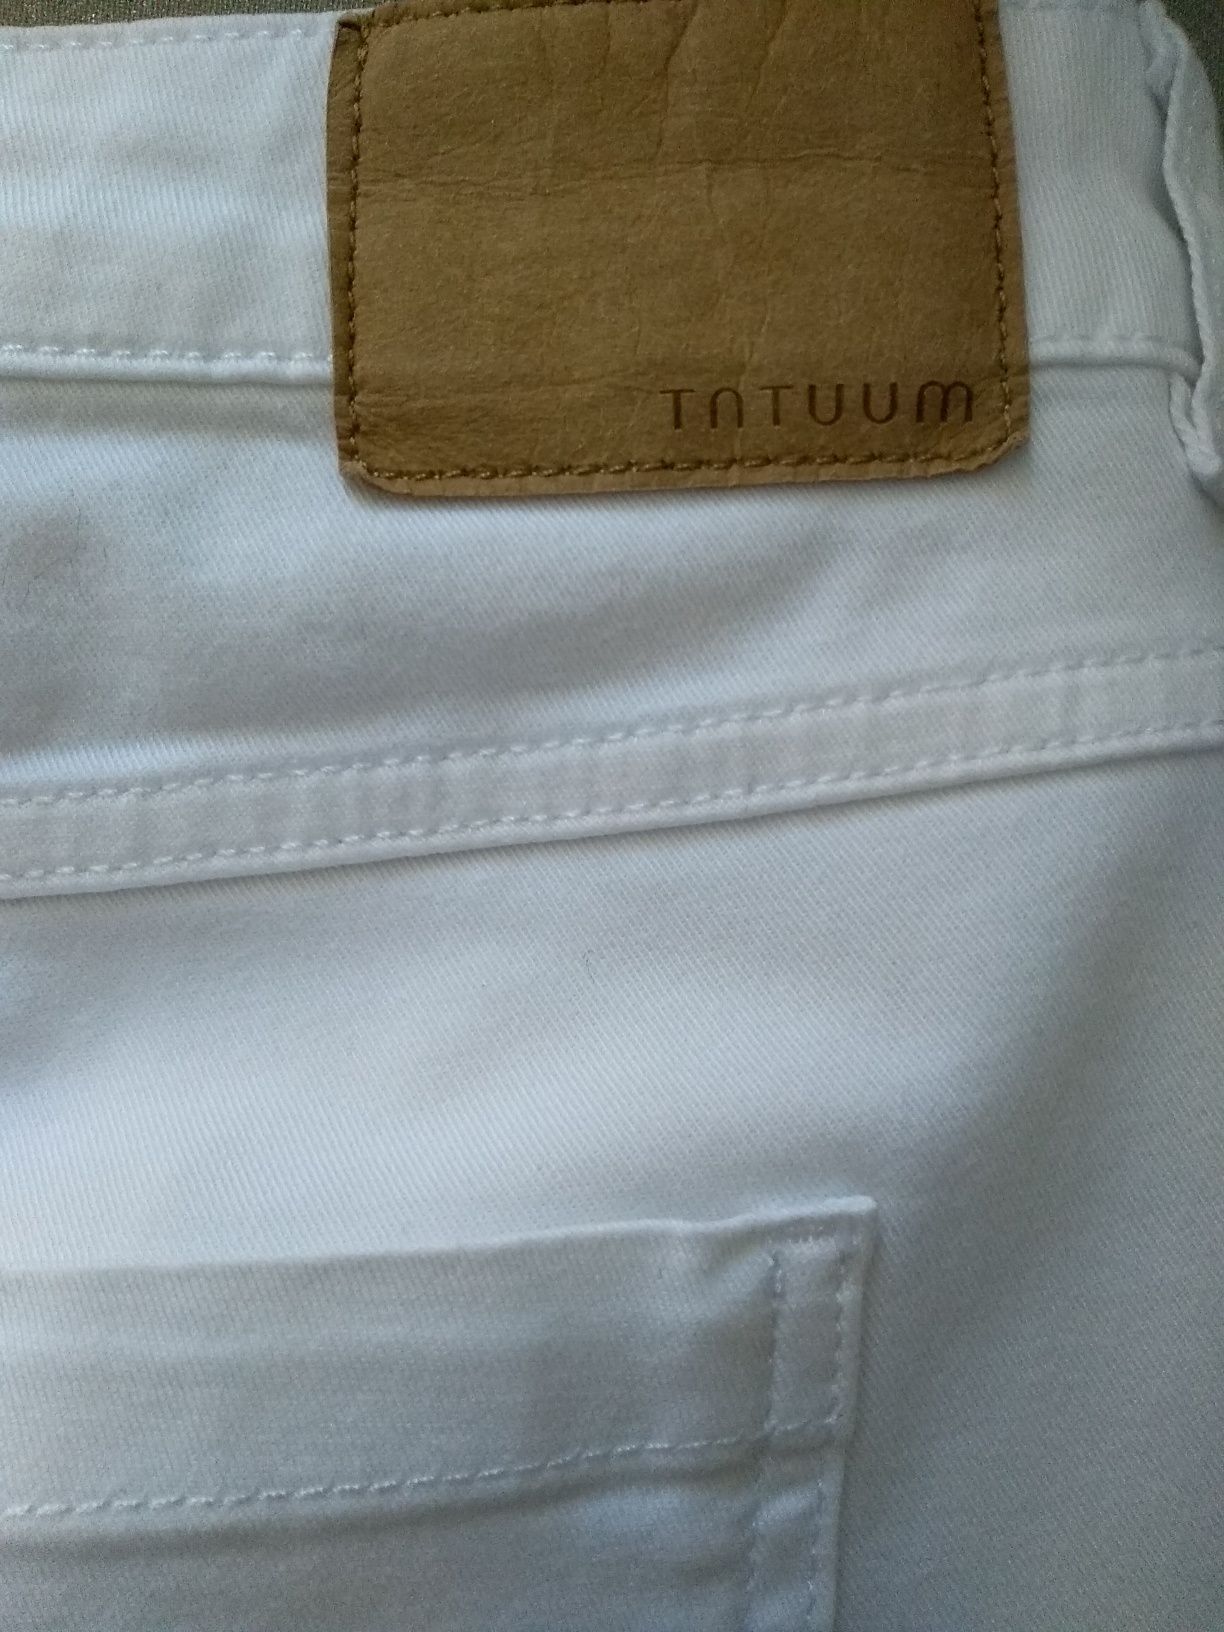 Spodnie Tatuum r.42